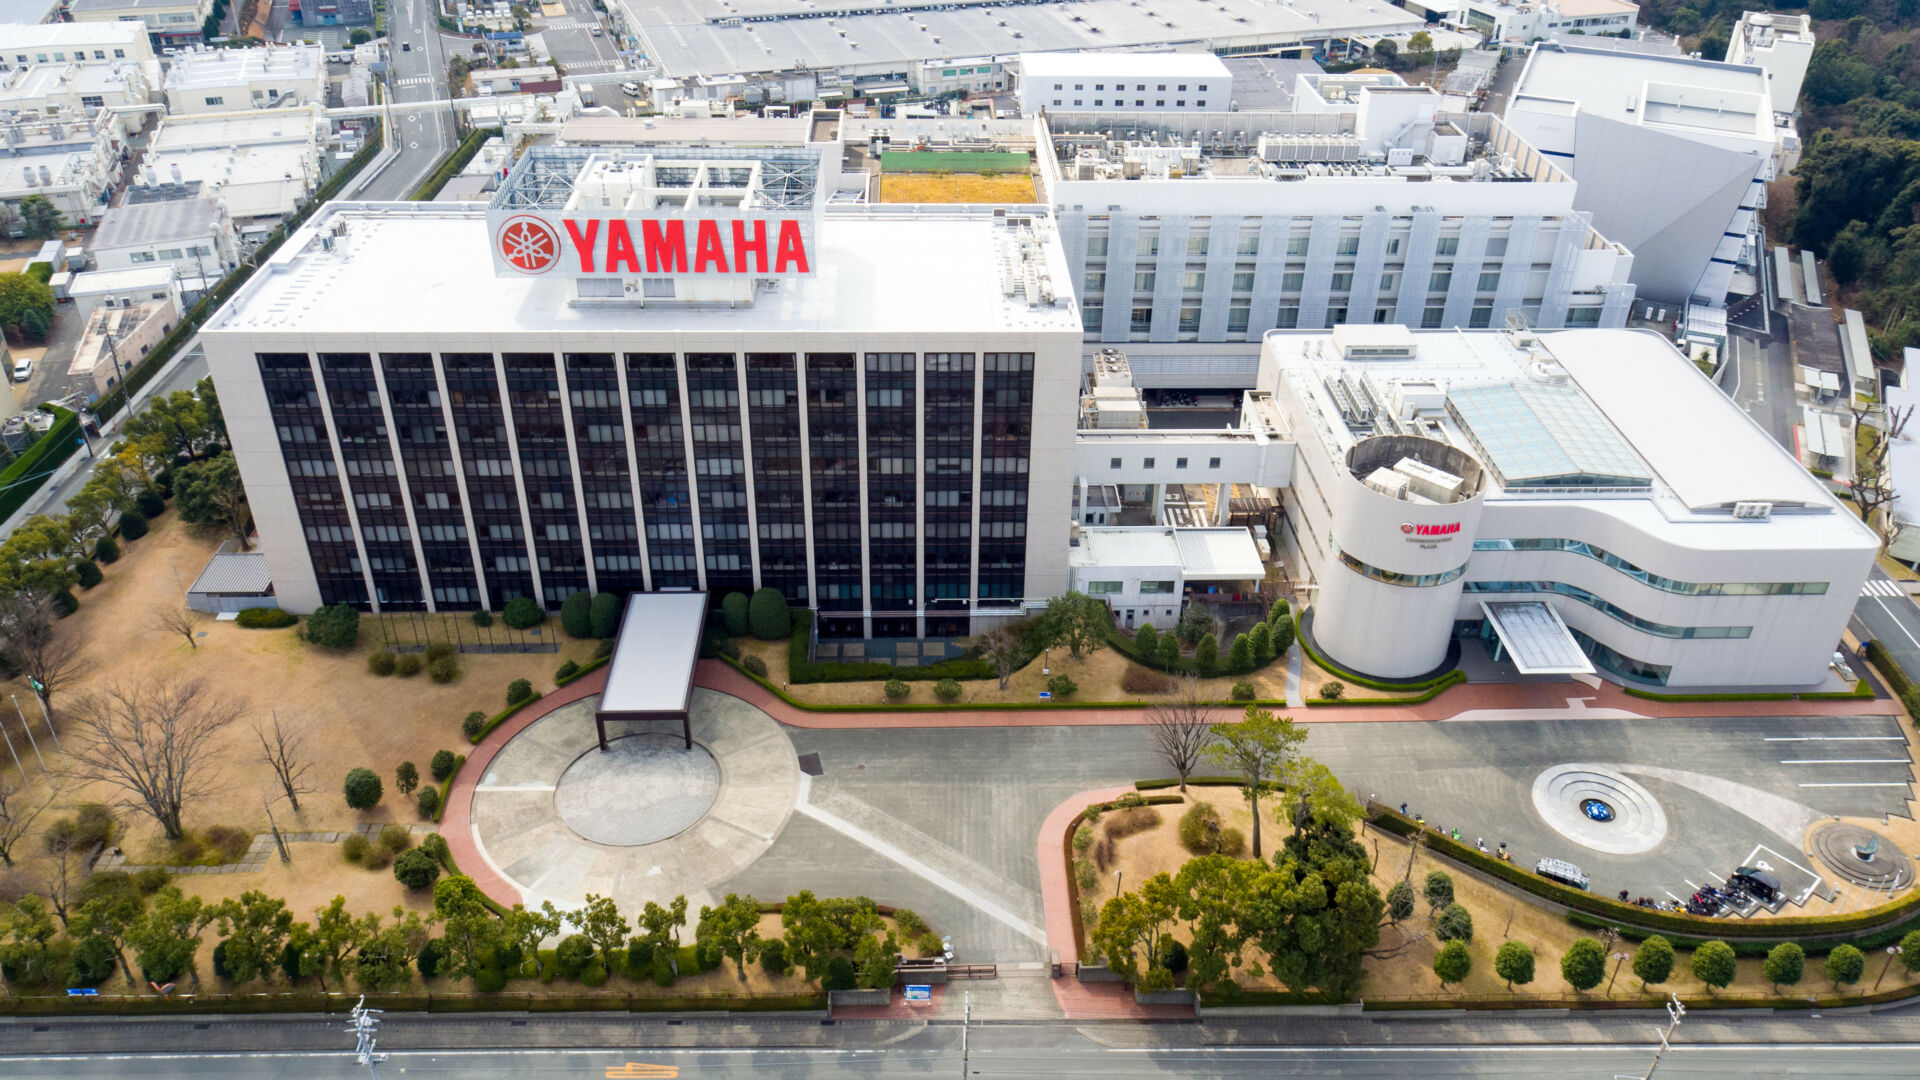 The headquarters building at Yamaha Motor Co. Ltd. in Japan. Photo courtesy Yamaha Motor Co. Ltd.